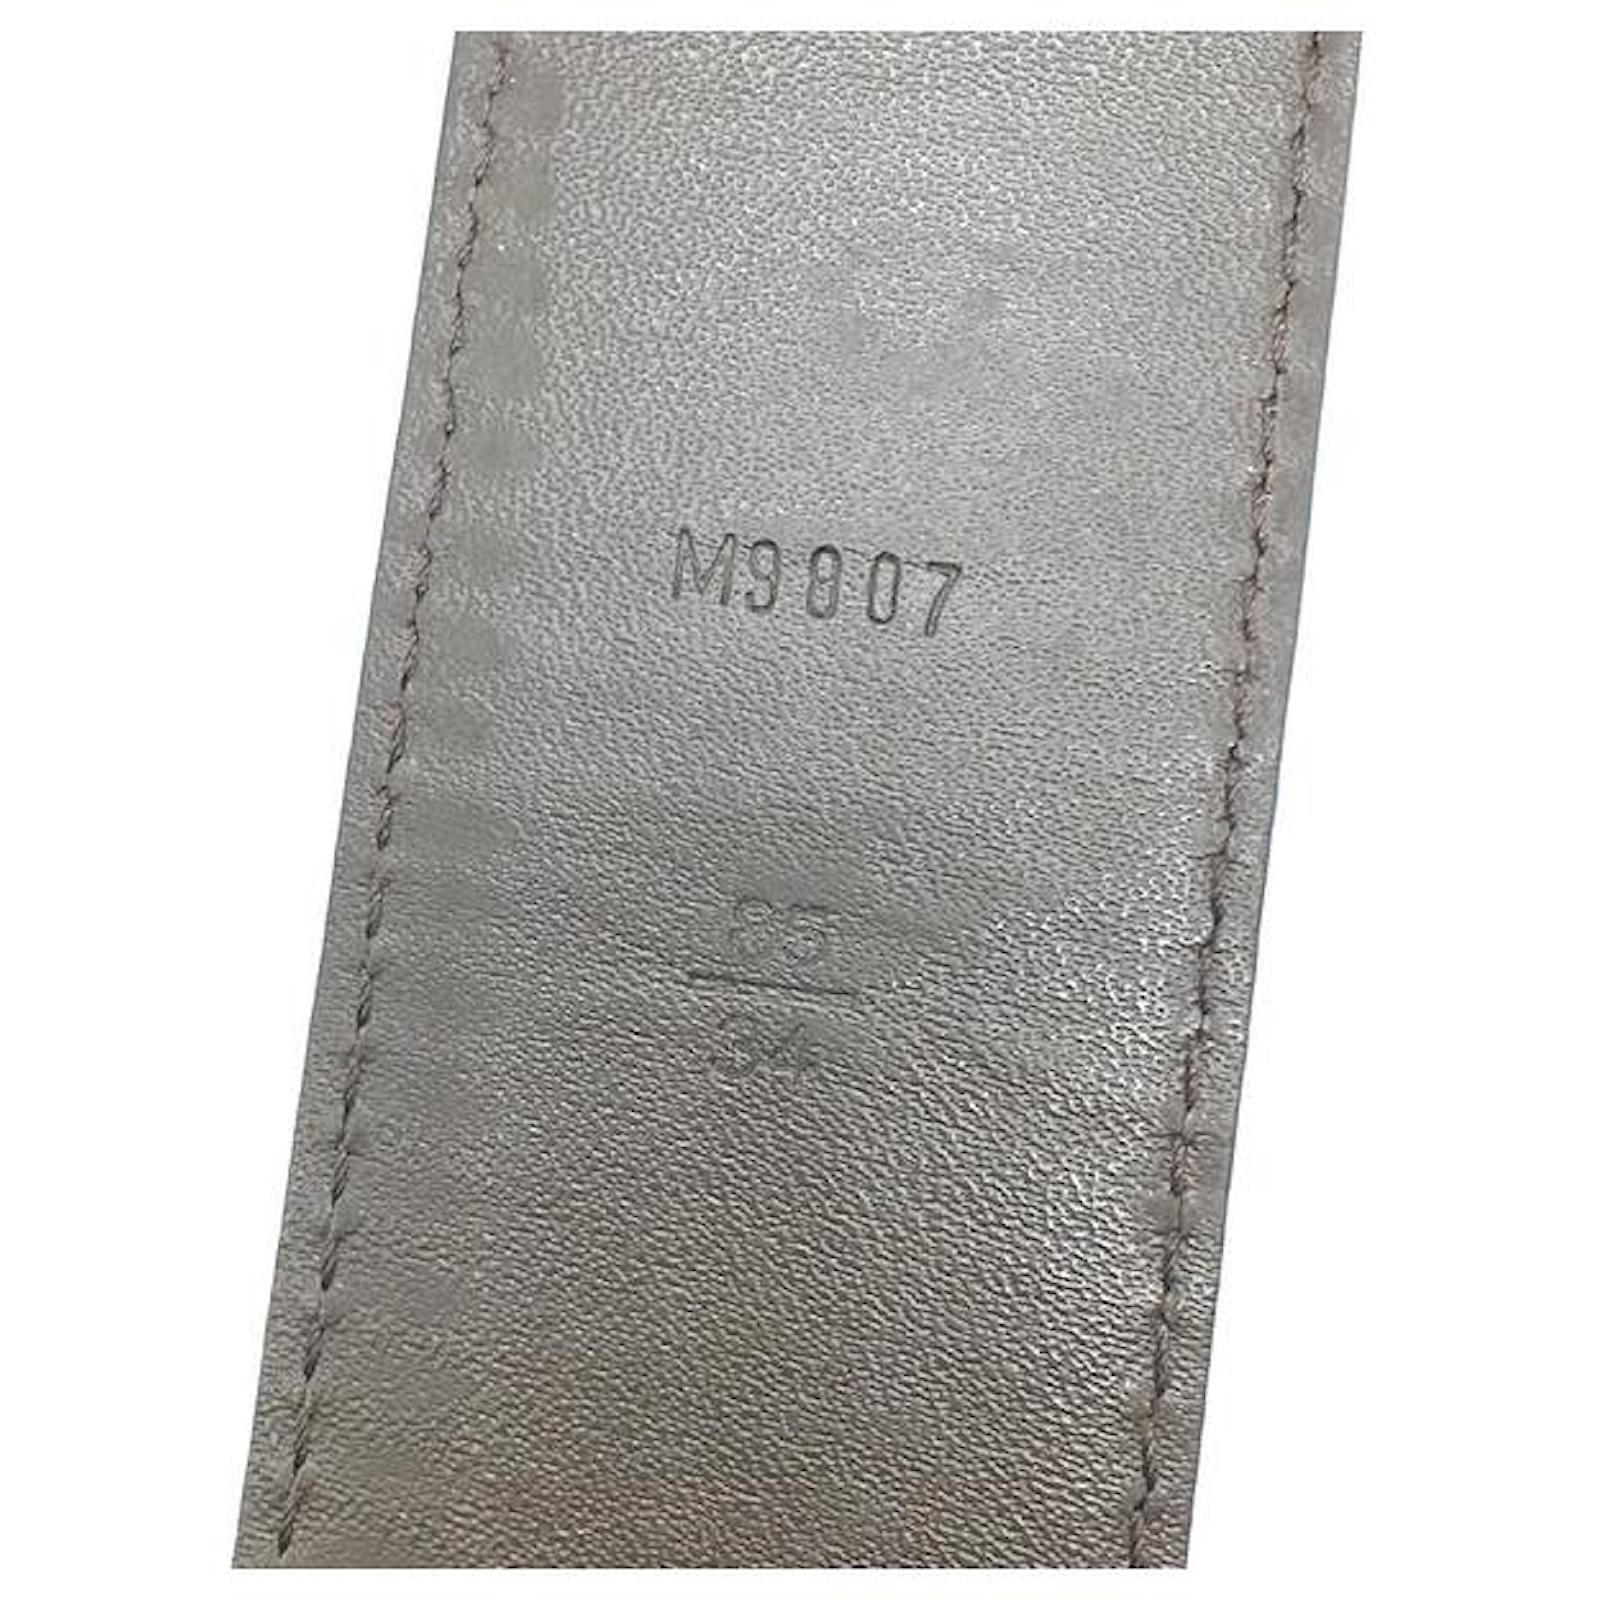 Louis Vuitton damier ebene 40mm Initialen Gürtelgröße 85/34 Braun